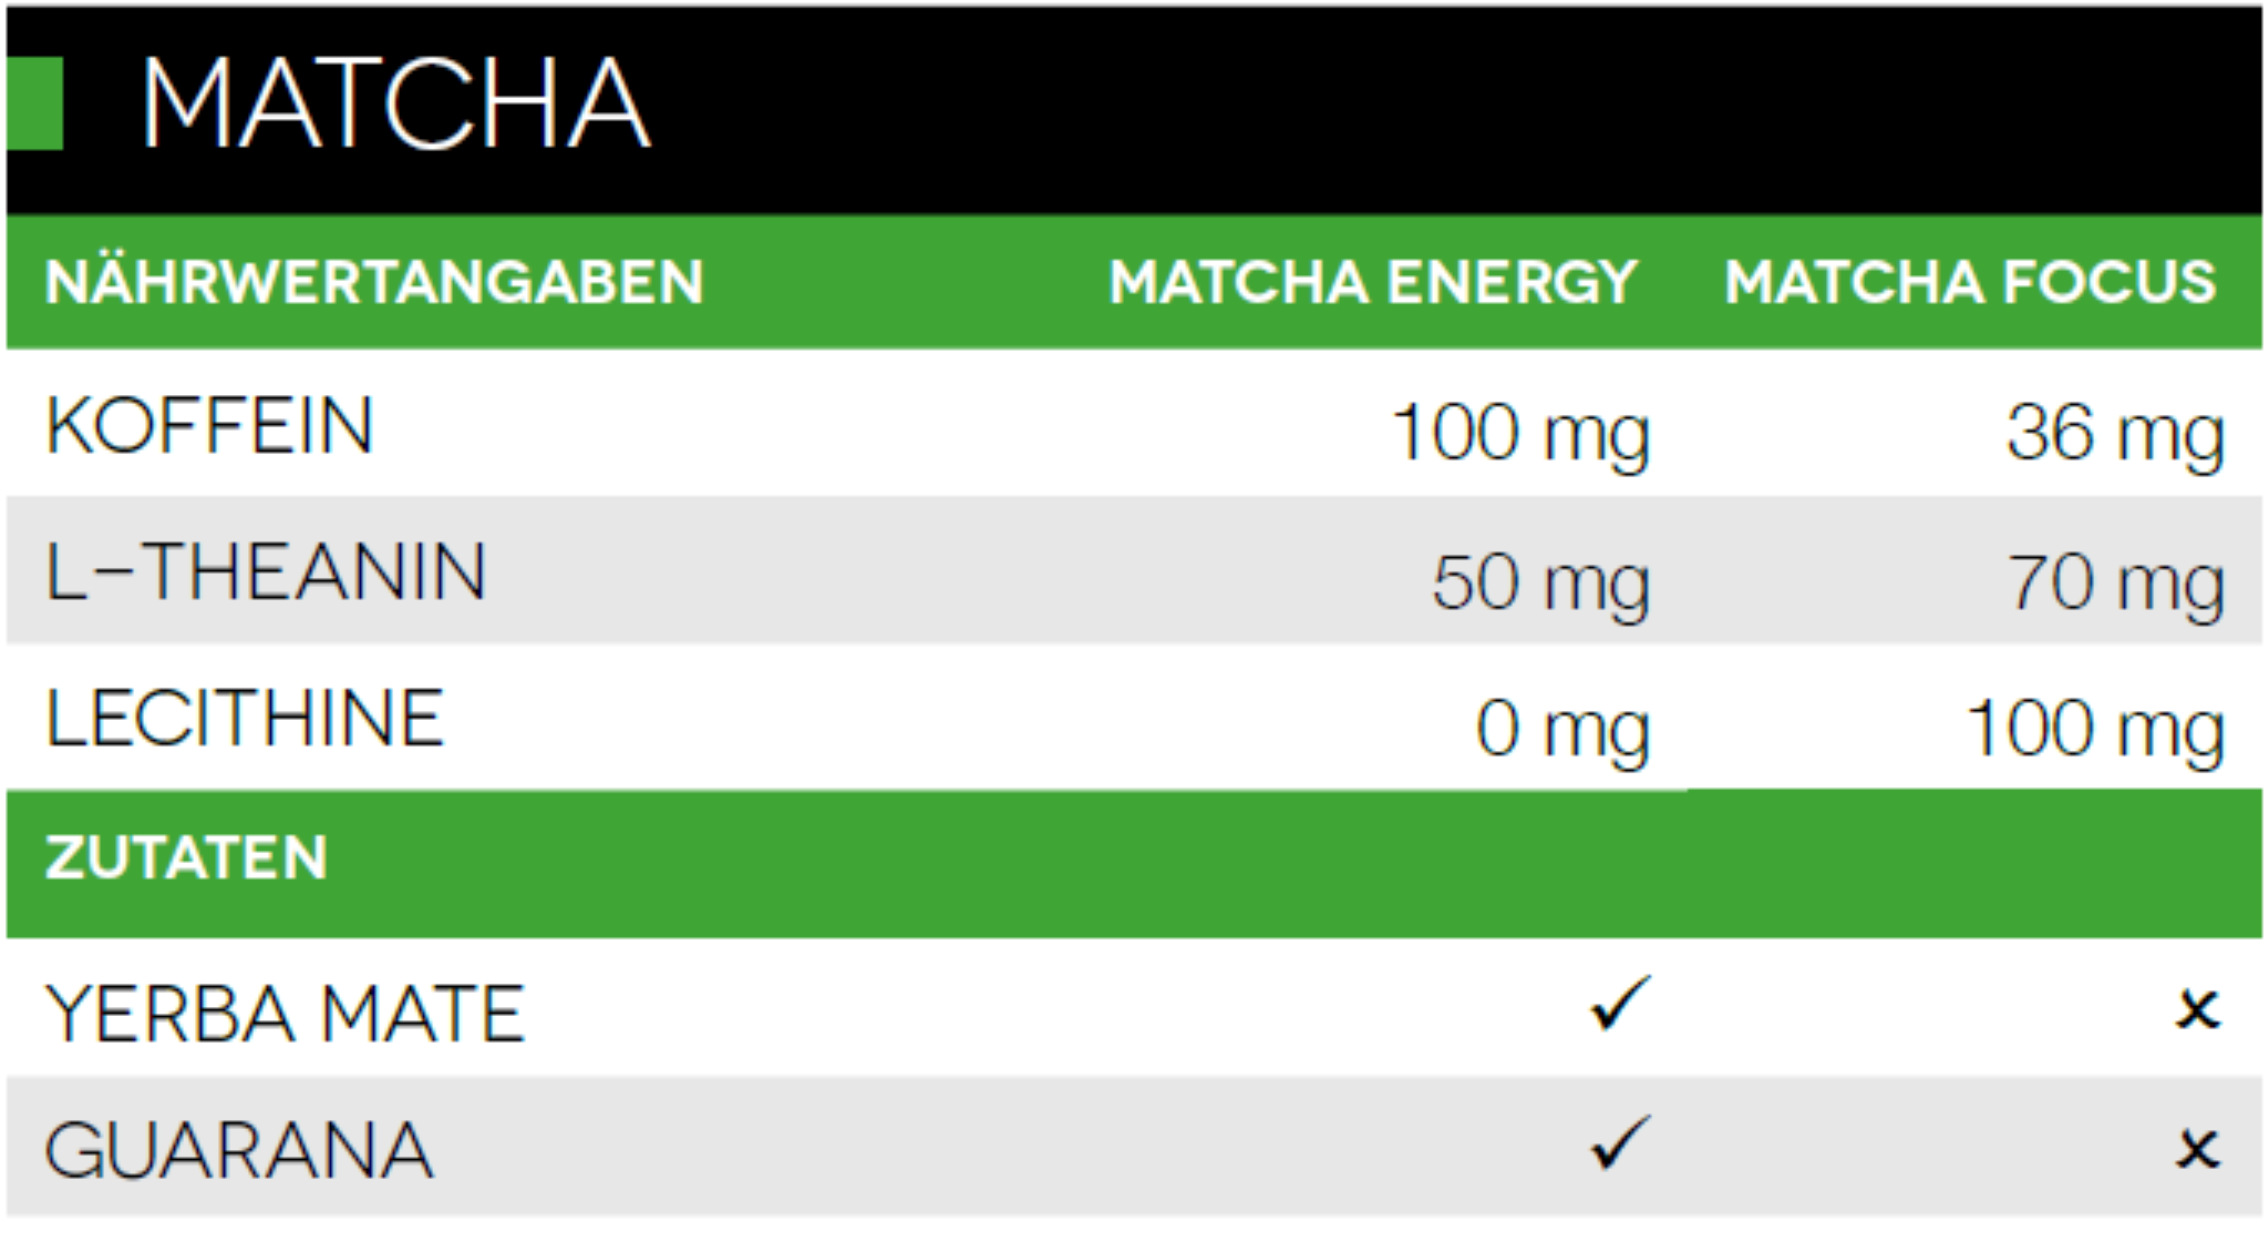 Matcha Energy Koffein